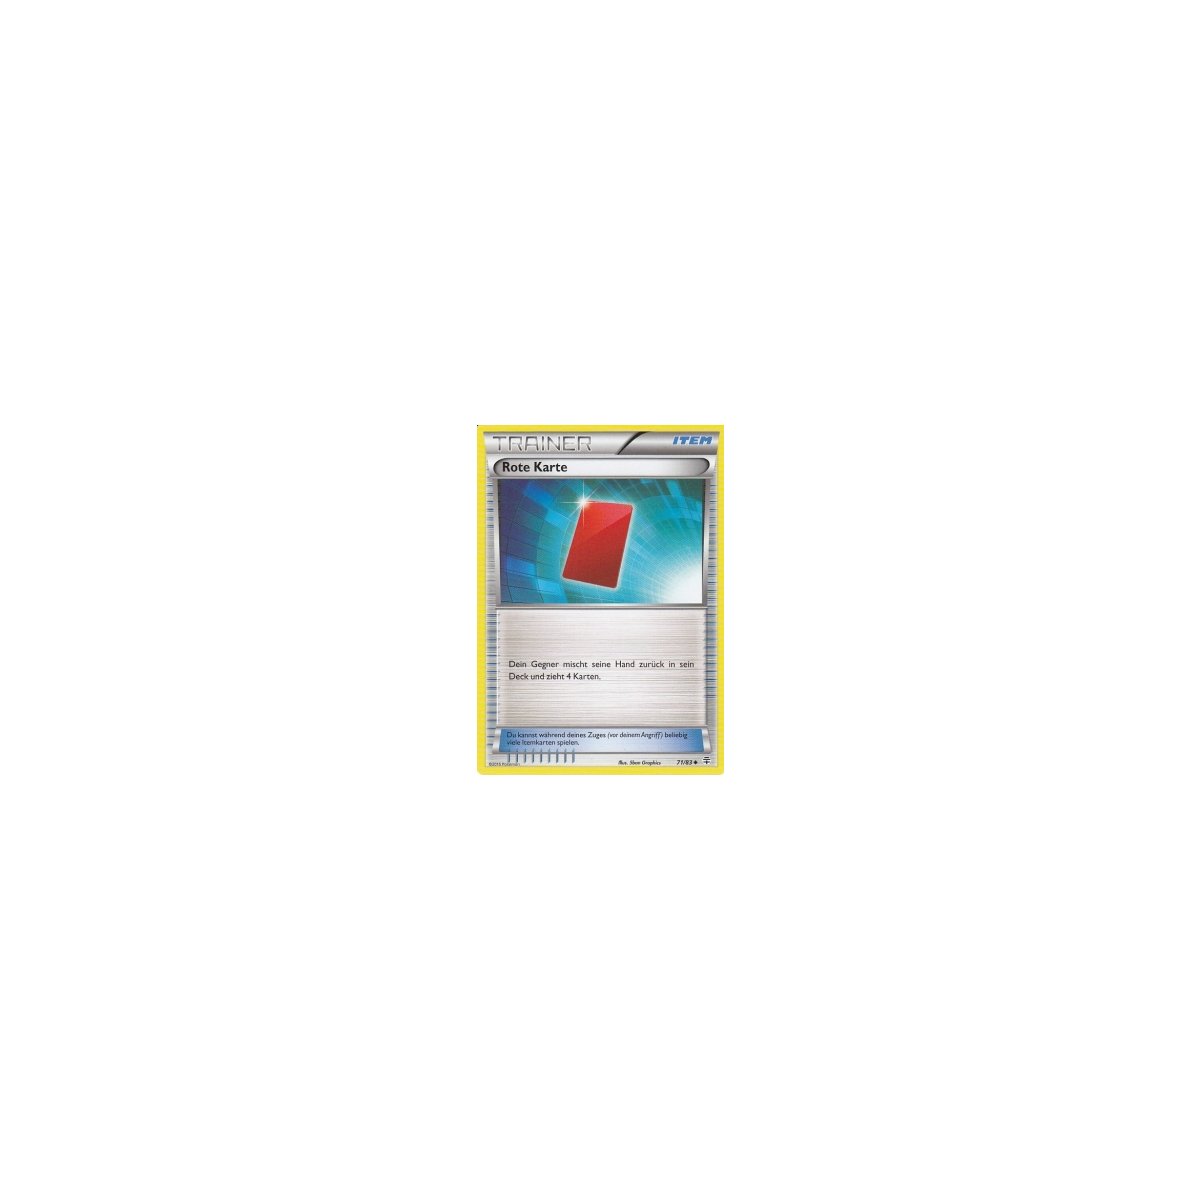 Rote Karte Generationen Pokemon 71/83 Trainer